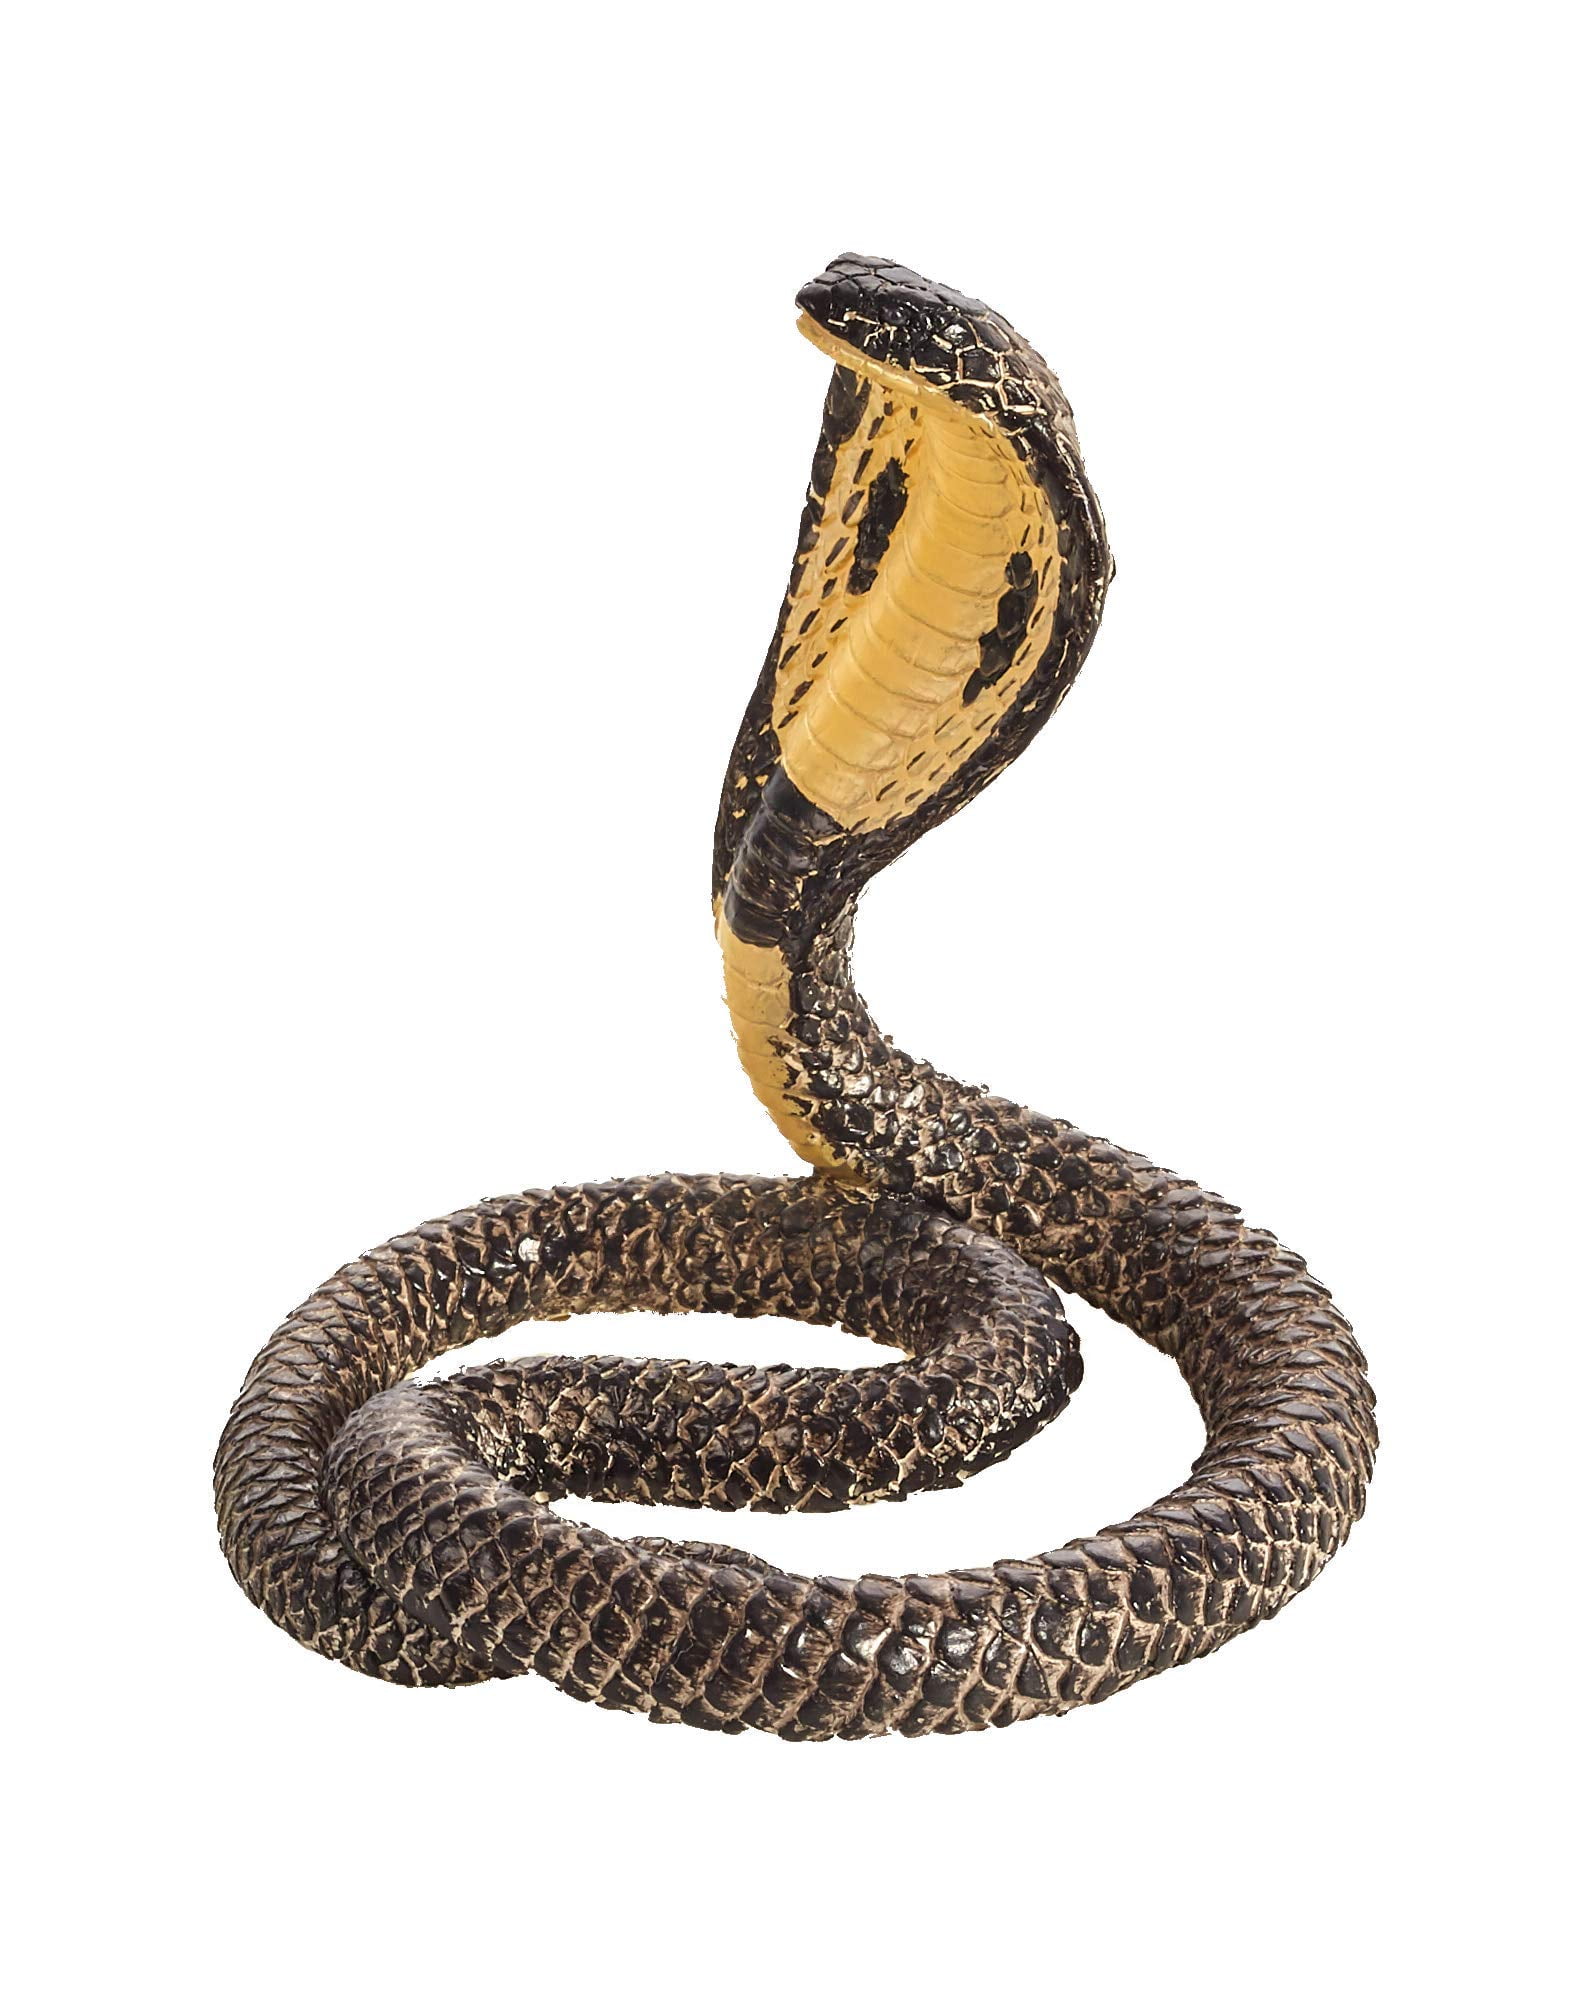 MOJO King Cobra Realistic International Wildlife Toy Replica Hand Painted  Figurine 